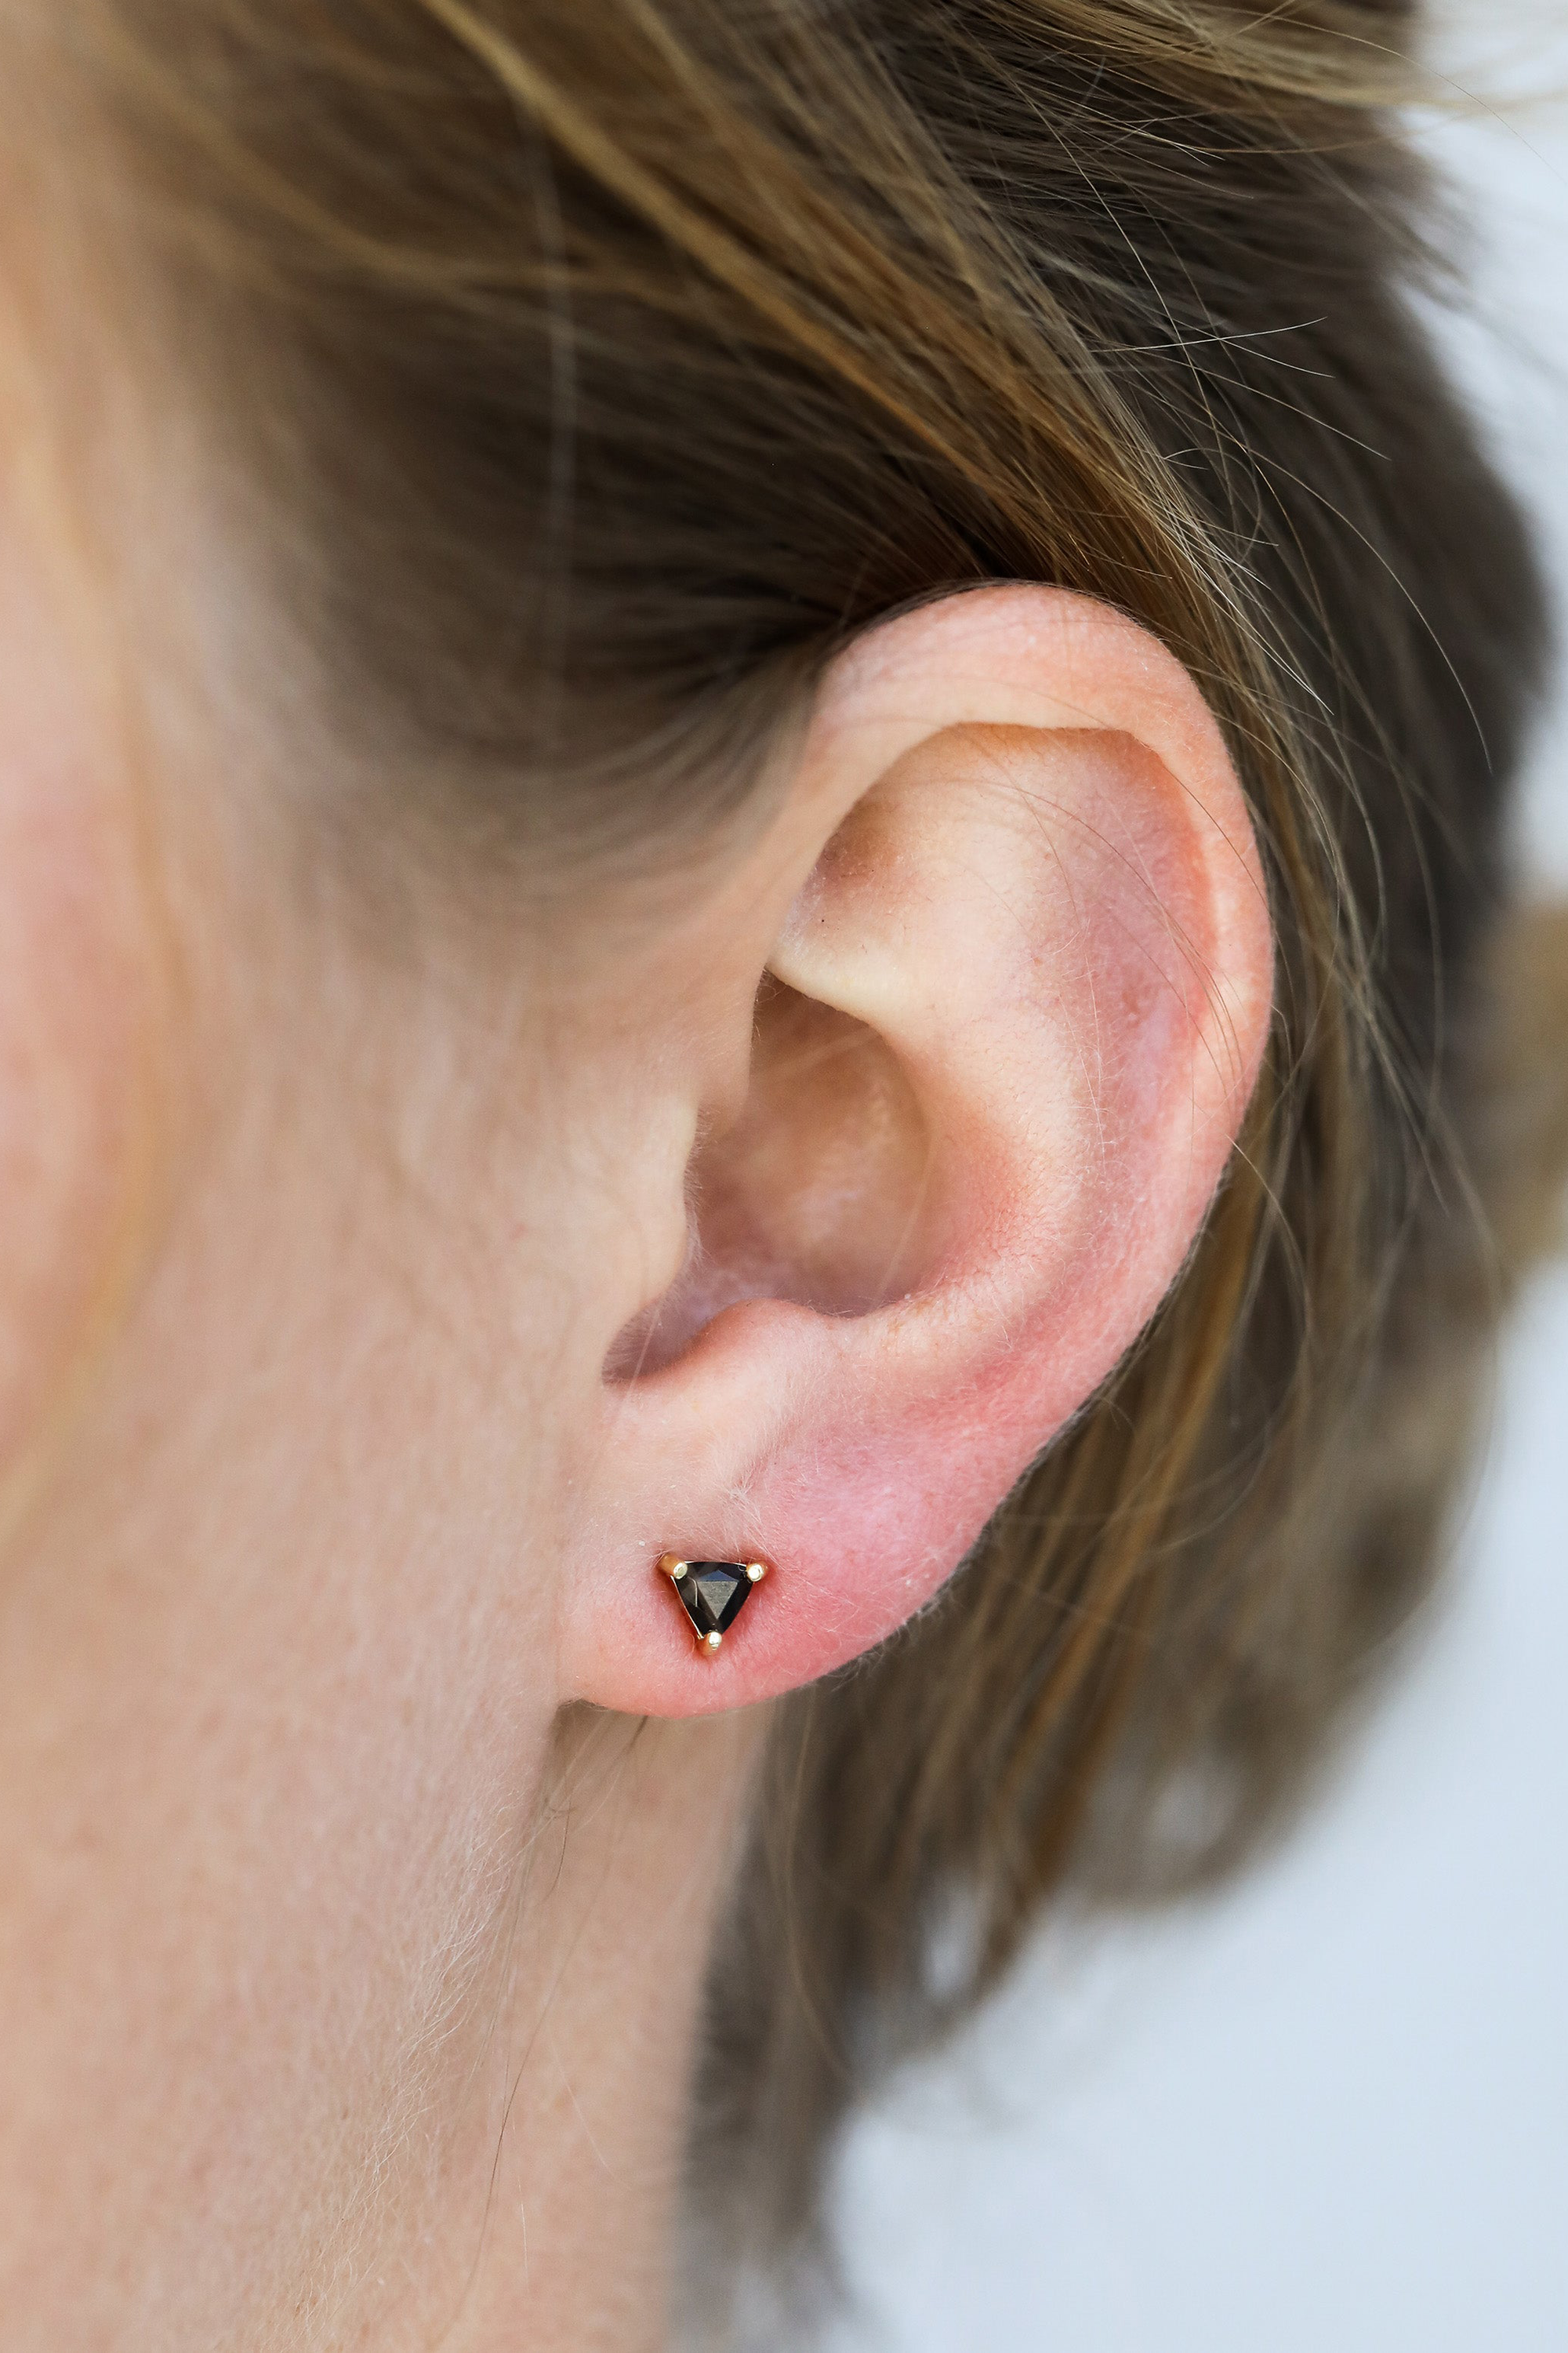 Mini Gem Earrings - Black Tourmaline